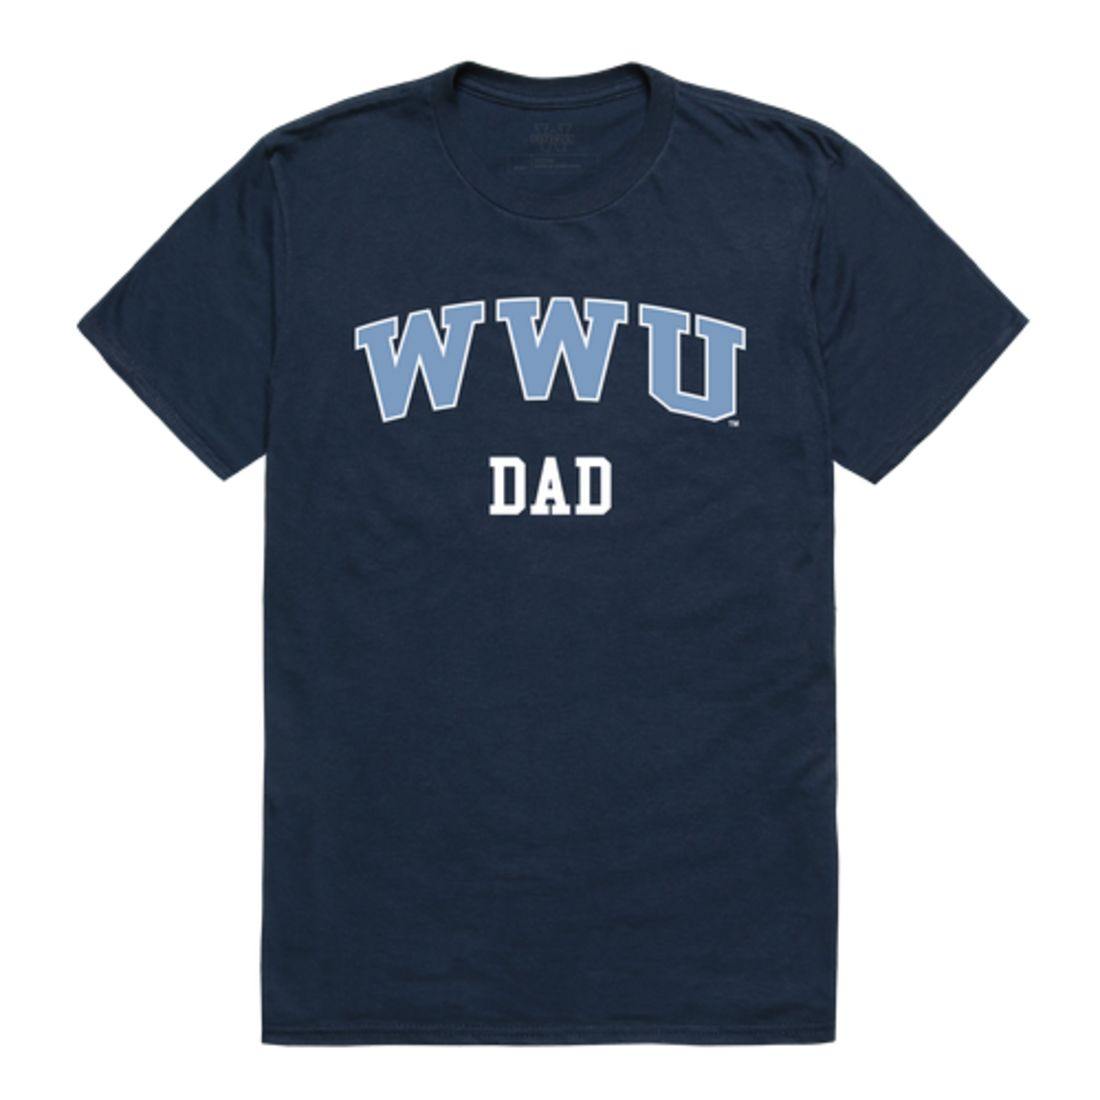 WWU Western Washington University Vikings College Dad T-Shirt-Campus-Wardrobe